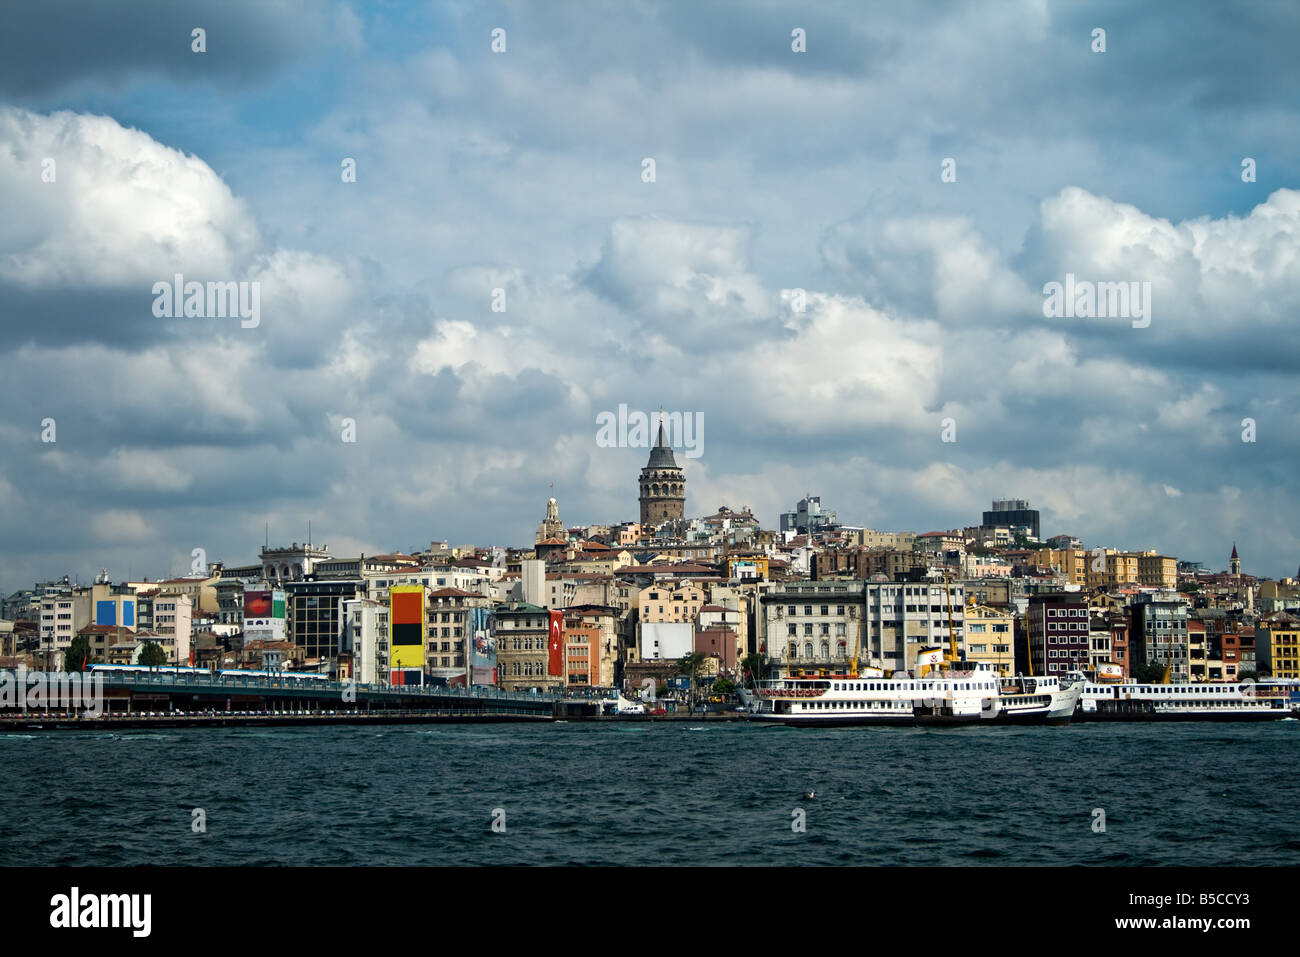 Boshphorus strait and asian side of Istanbul Stock Photo